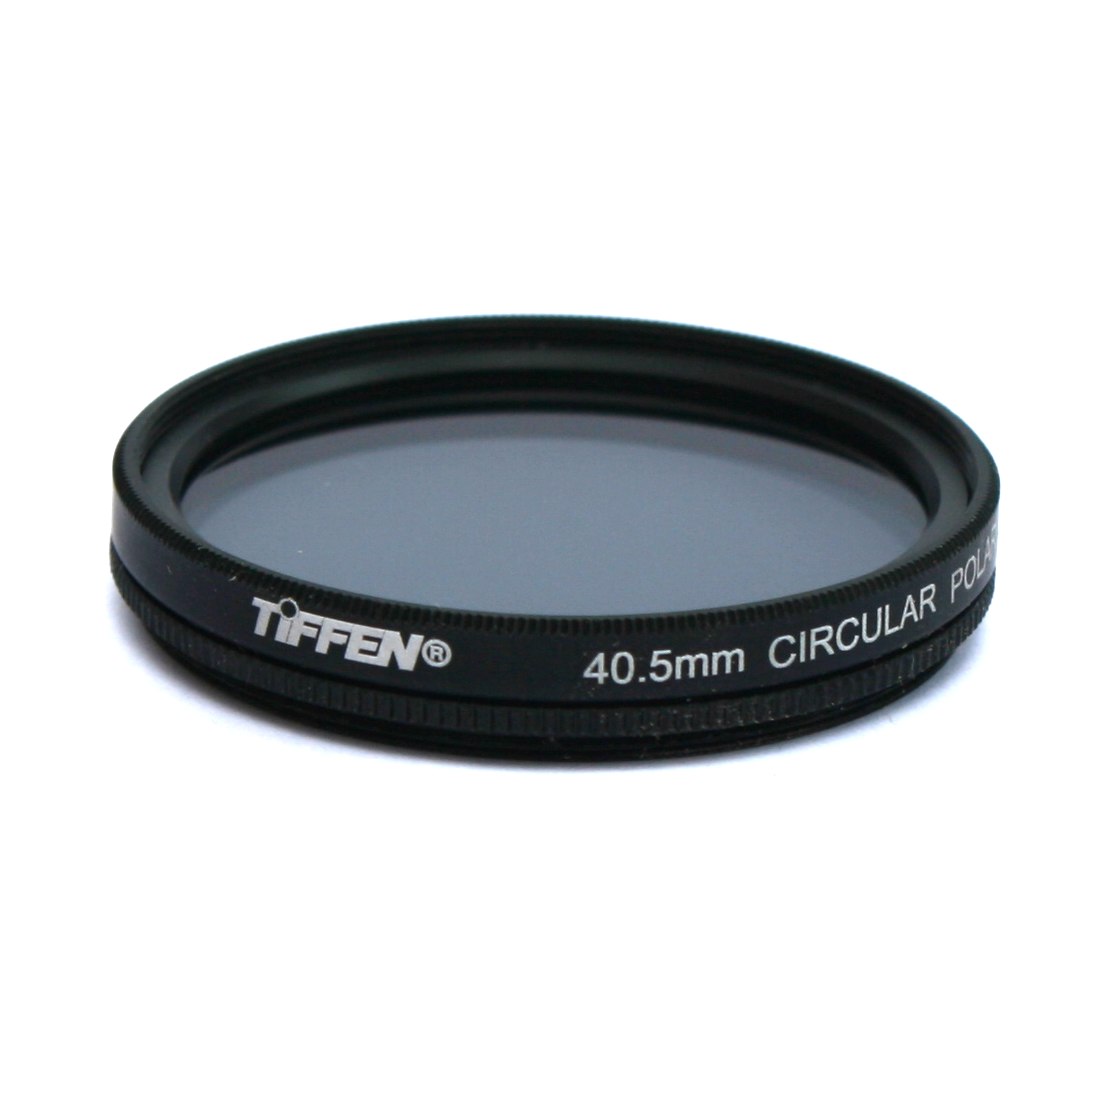 Tiffen 40.5mm Circular Polarizer